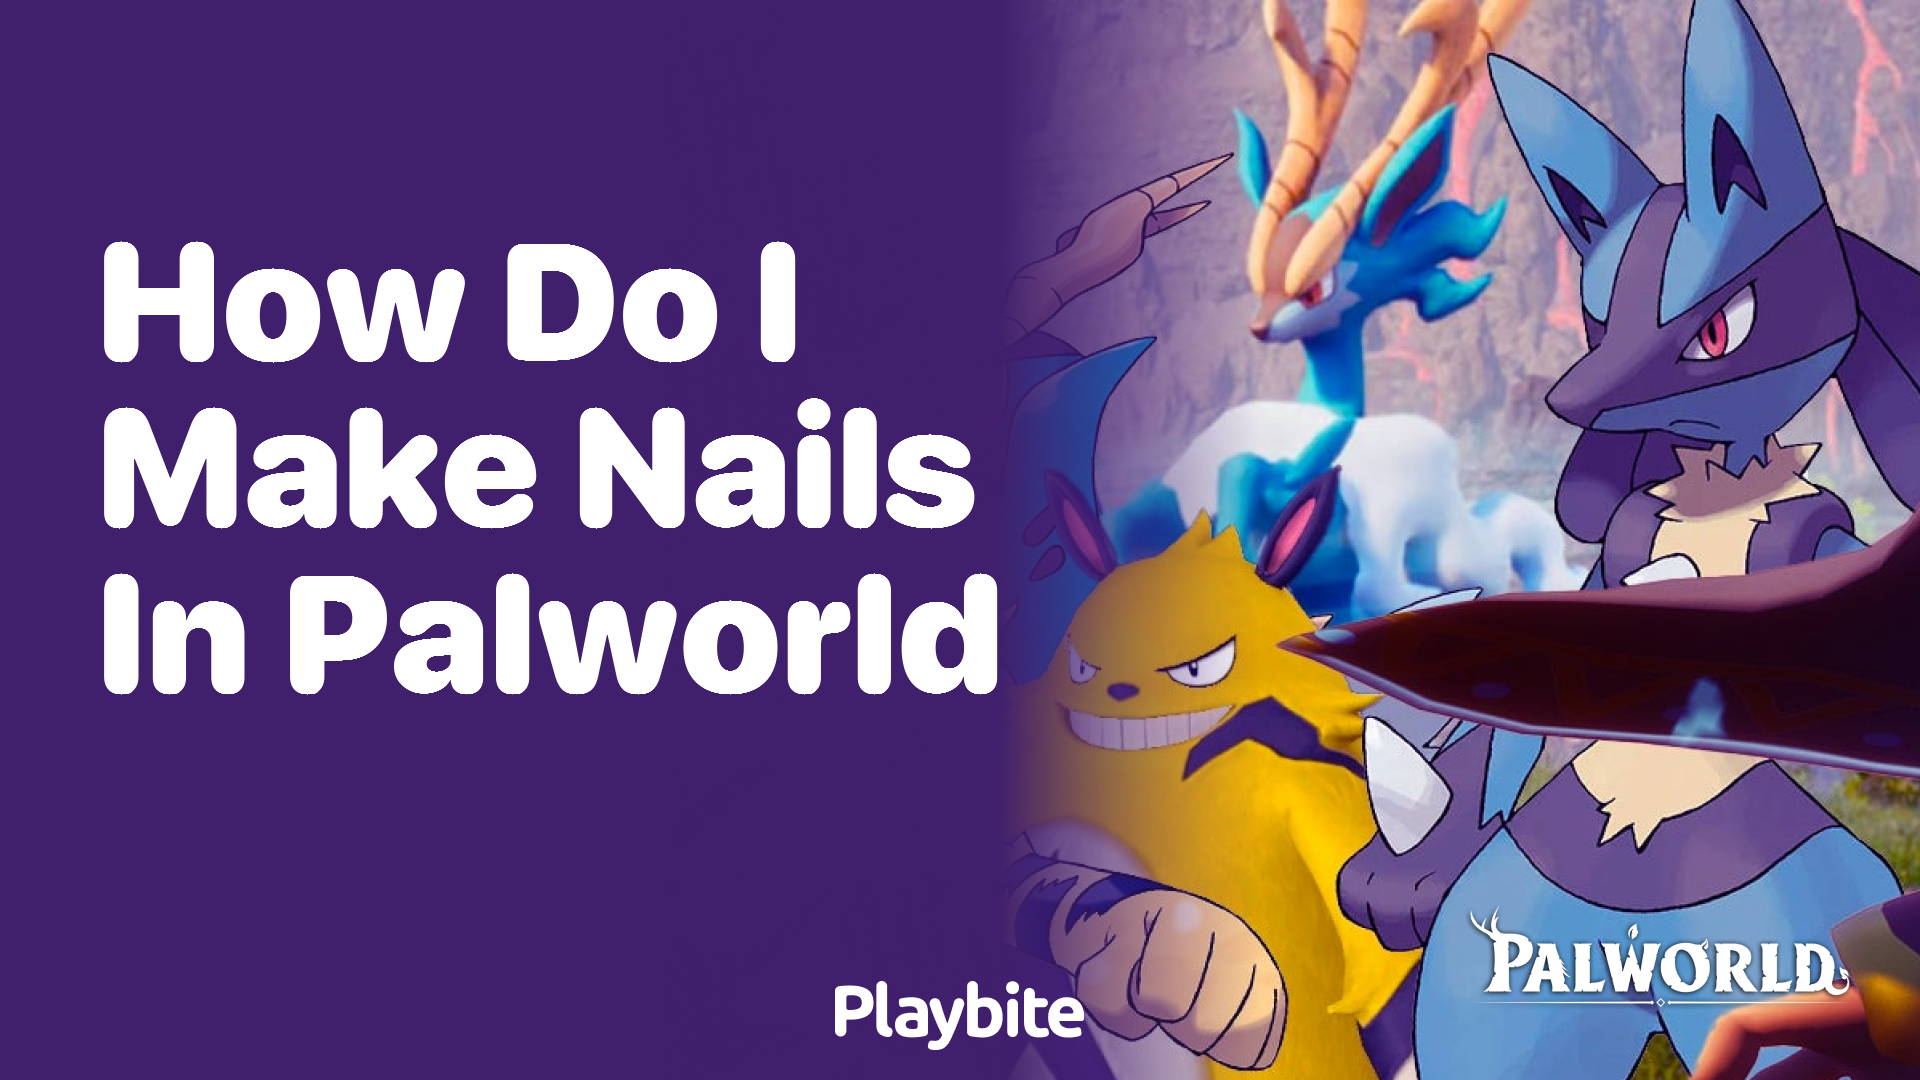 How do I make nails in Palworld?